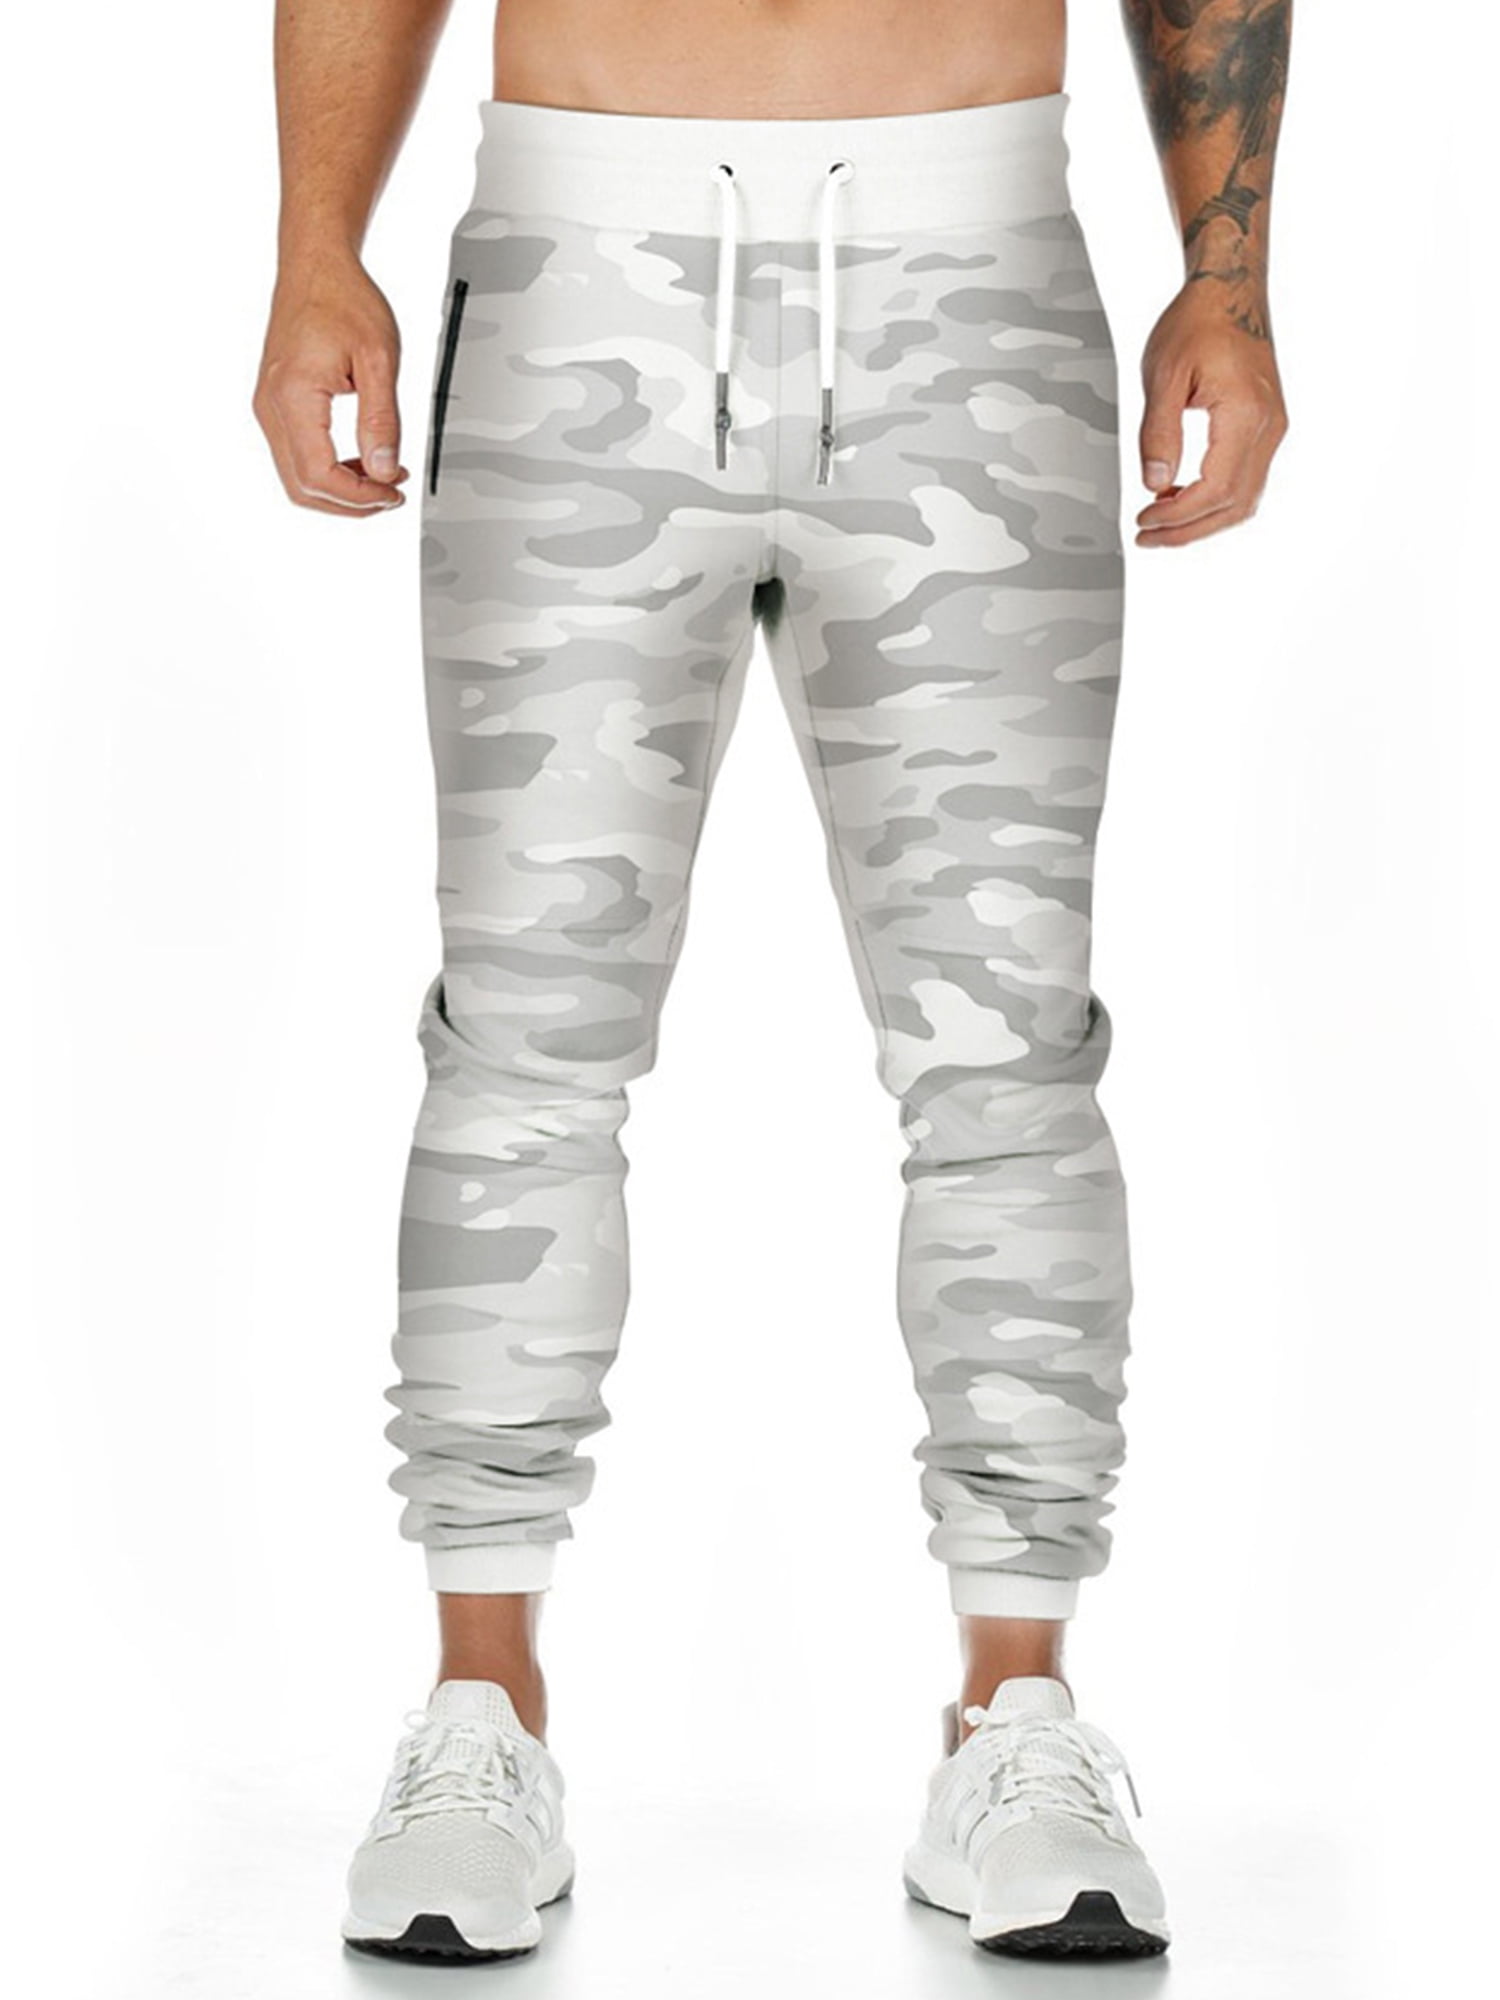 SILKWORLD Men's Cotton Yoga Sweatpants Athletic Lounge Pants Open Bottom Joggers Running Pants for Men with Zipper Pockets 